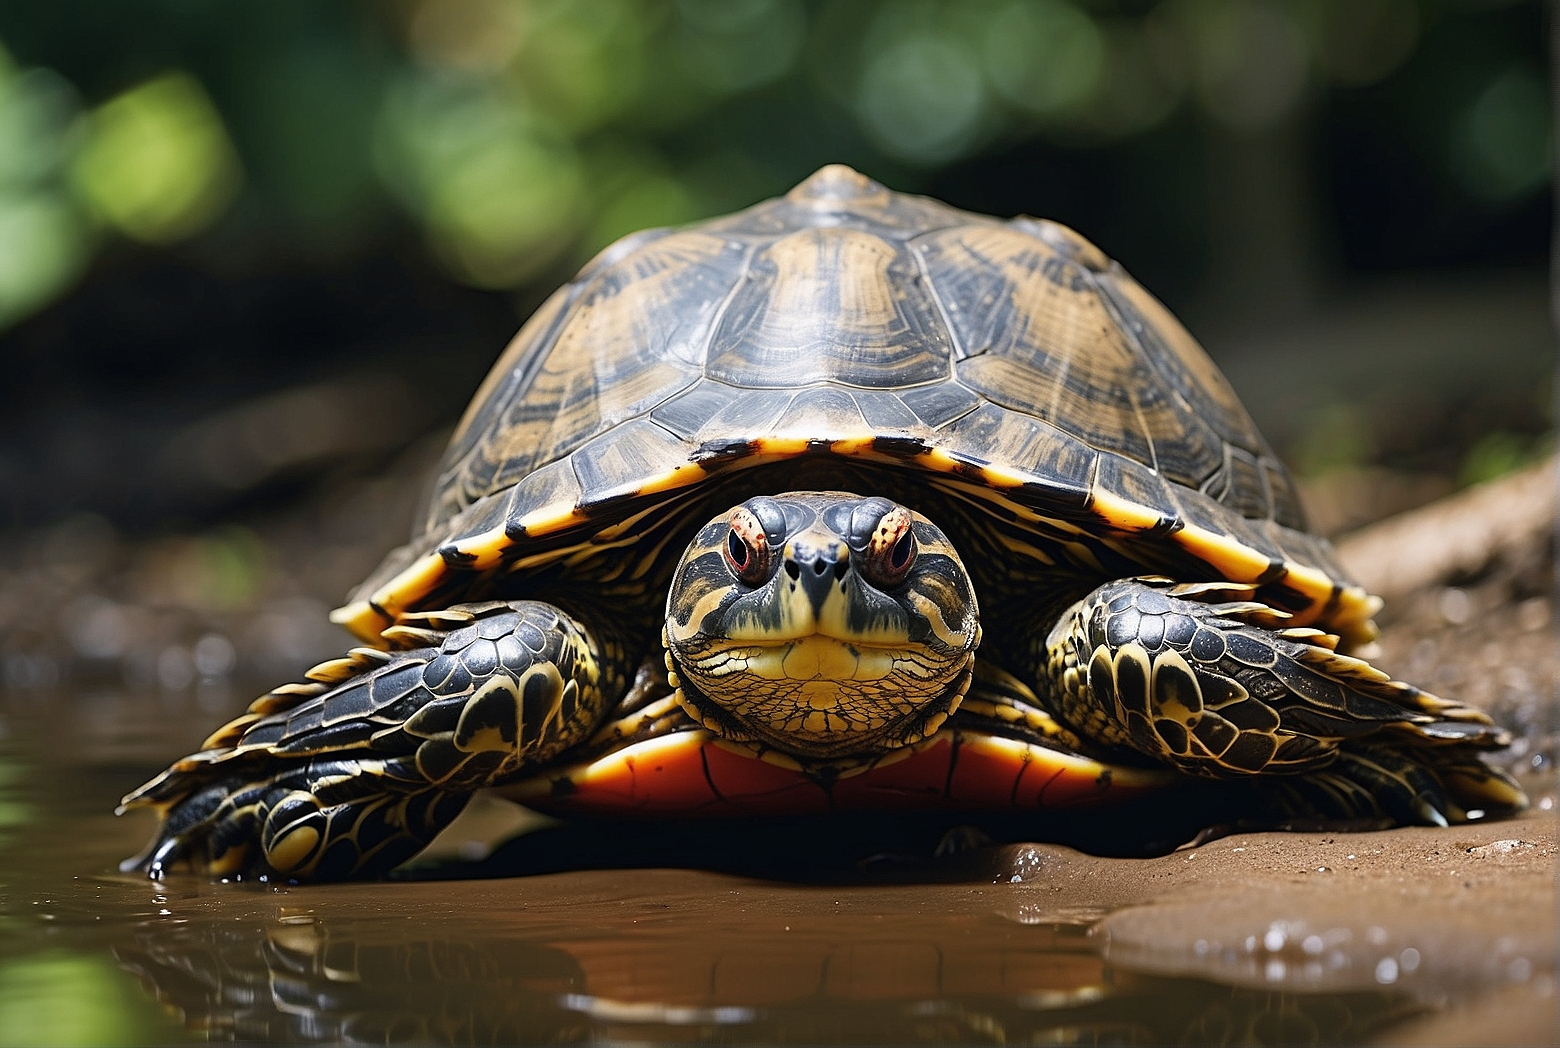 Understanding the Egg-Laying Behavior of Red-Eared Slider Turtles